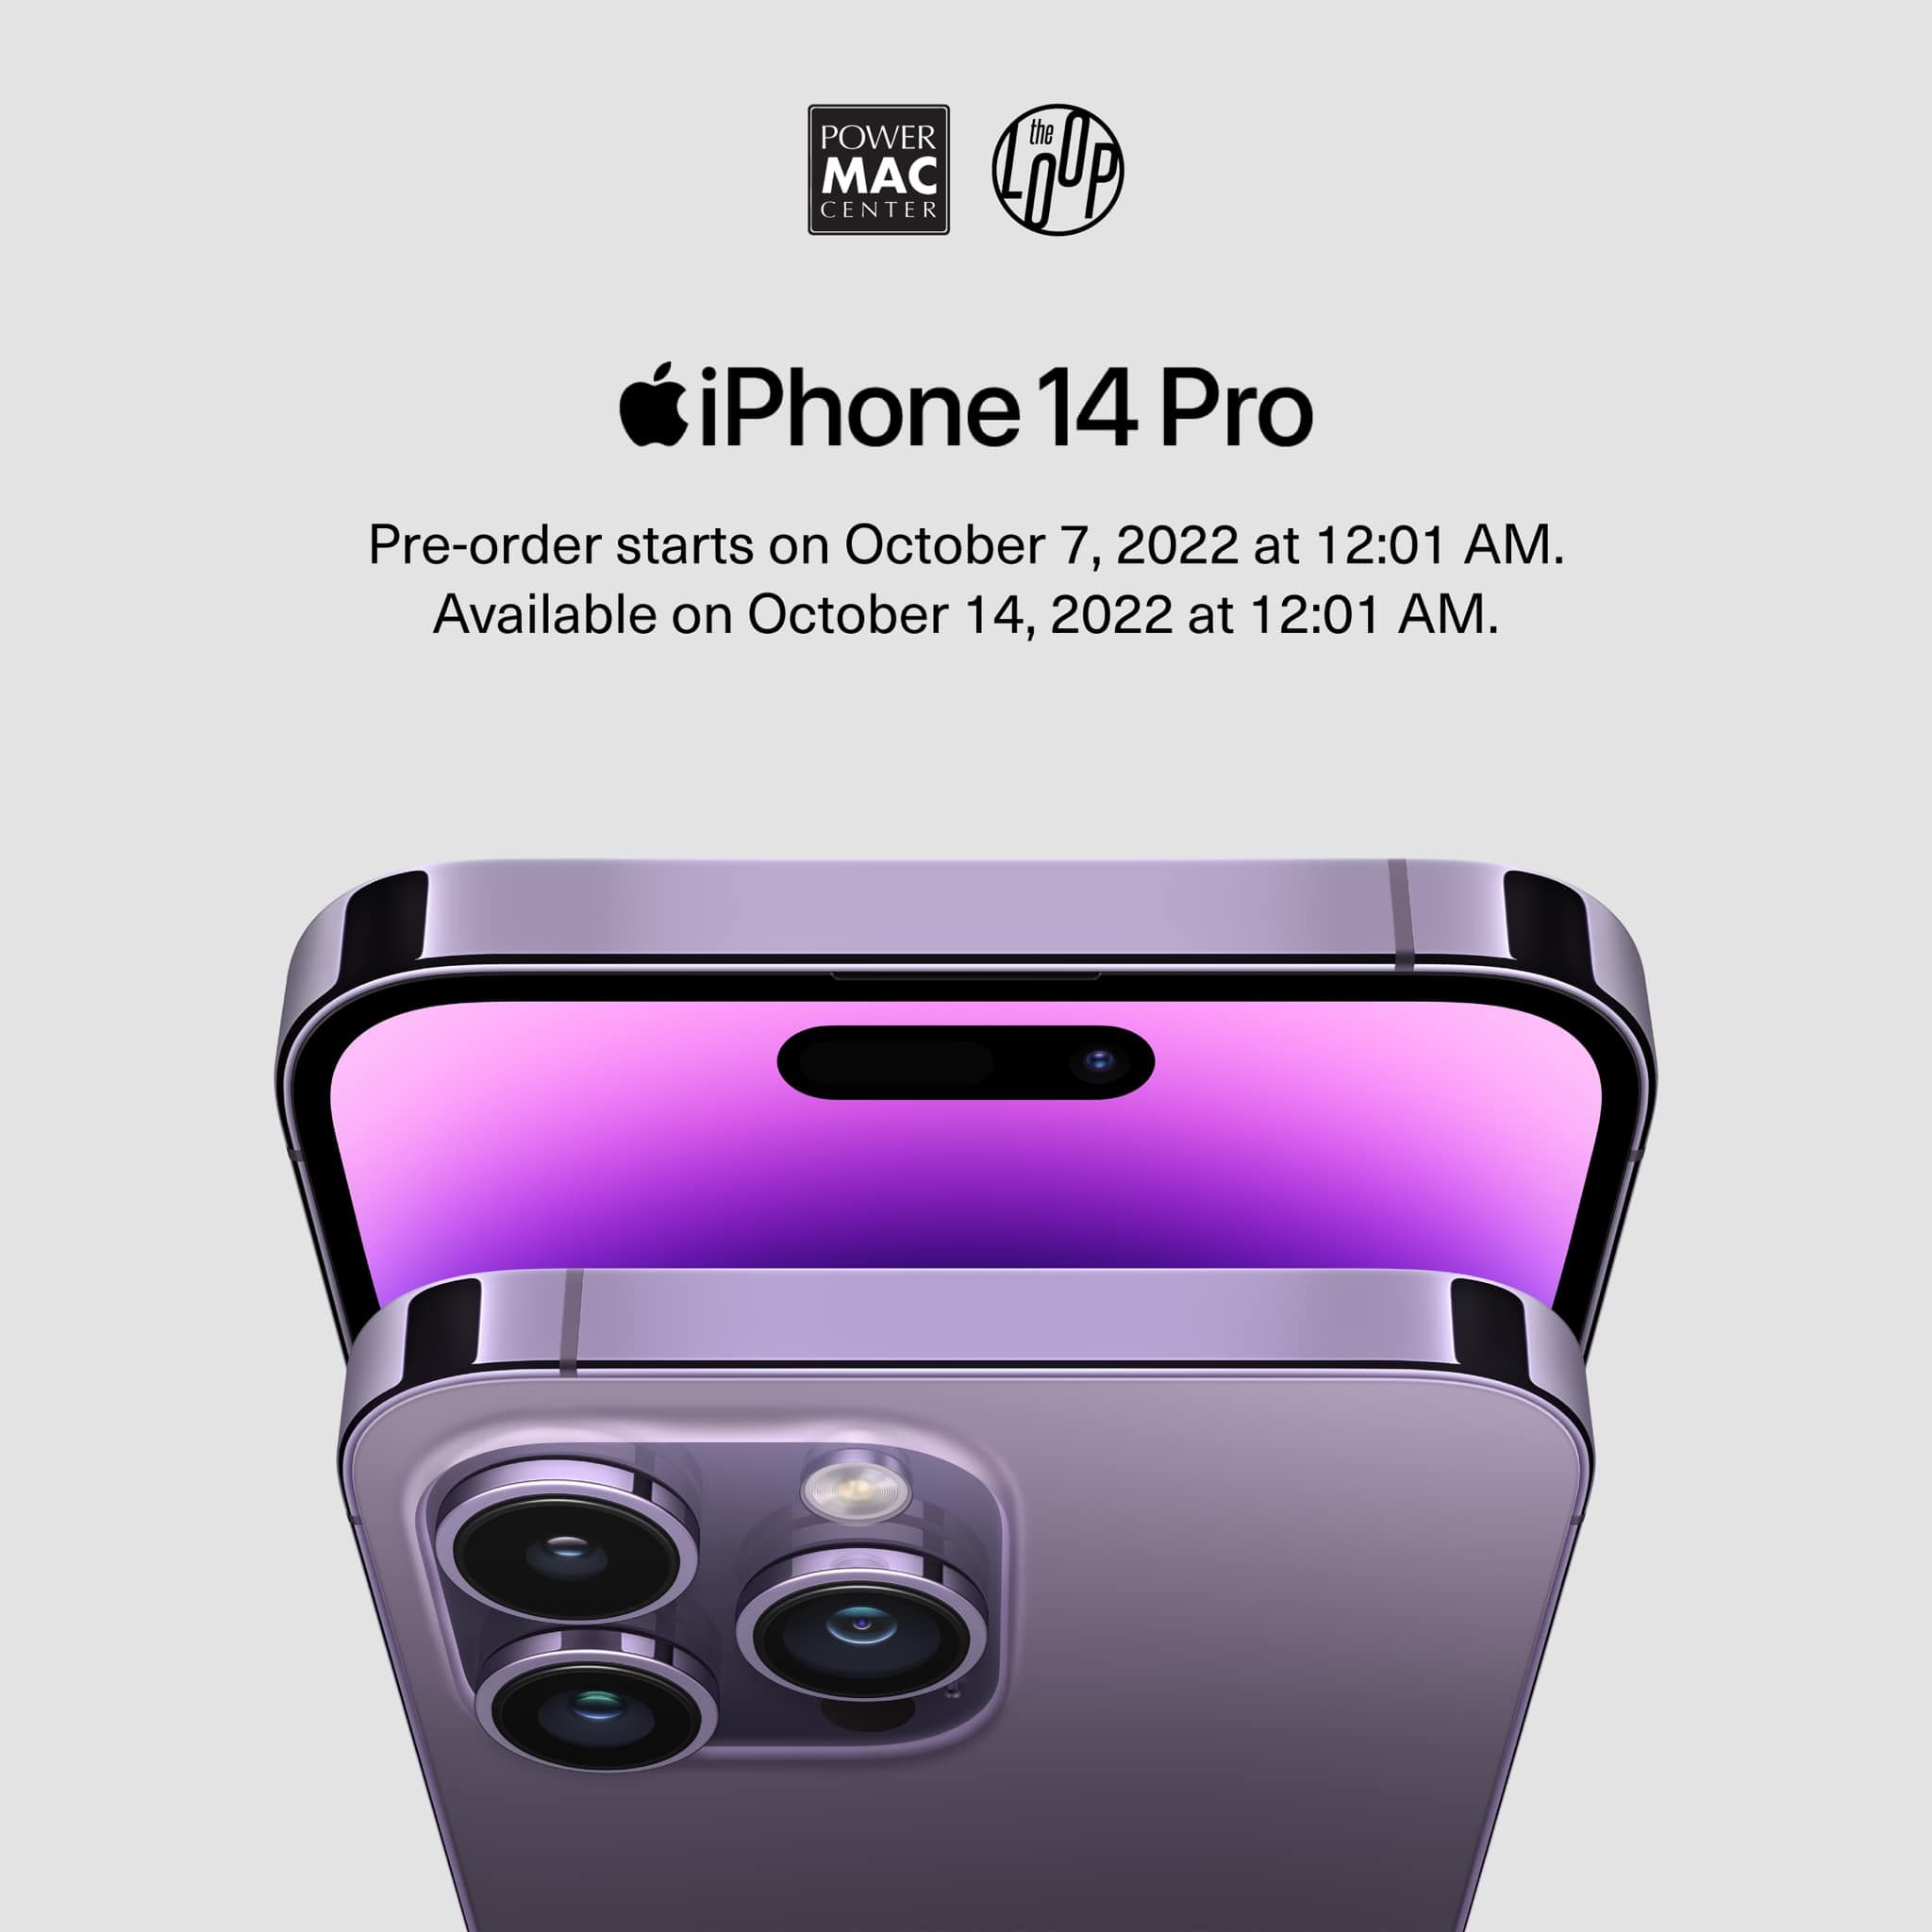 iPhone 14 Power Mac Center Deals - iPhone 14 Pro Hero